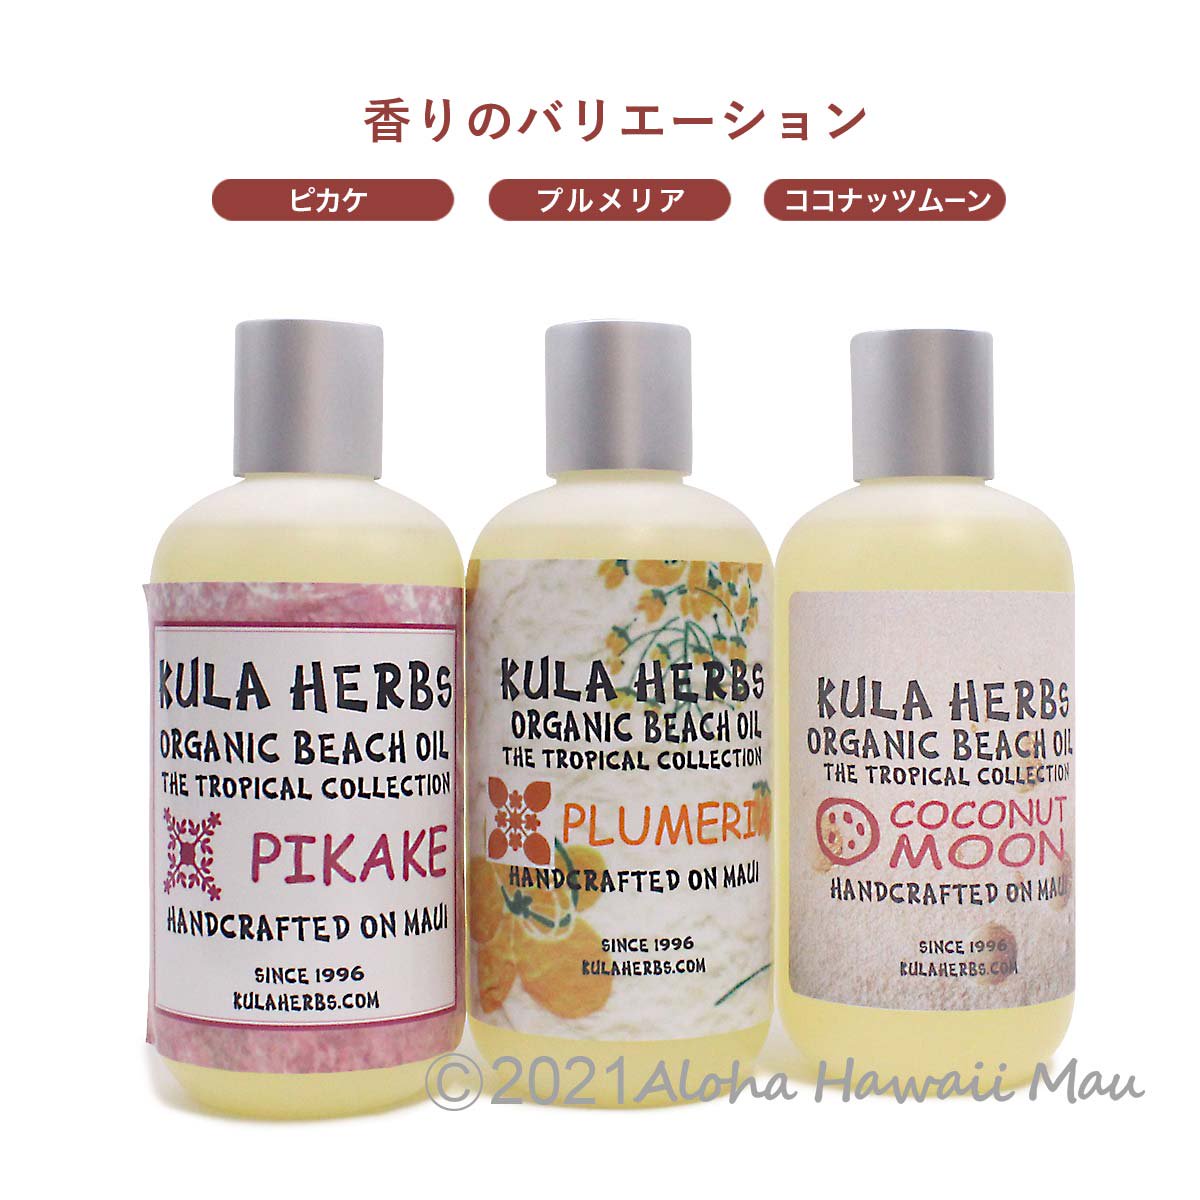 Kula Herbs クラハーブス オーガニックビーチオイル ボディオイル プルメリアの香り 8oz ハワイアン雑貨Aloha Hawiai Mau